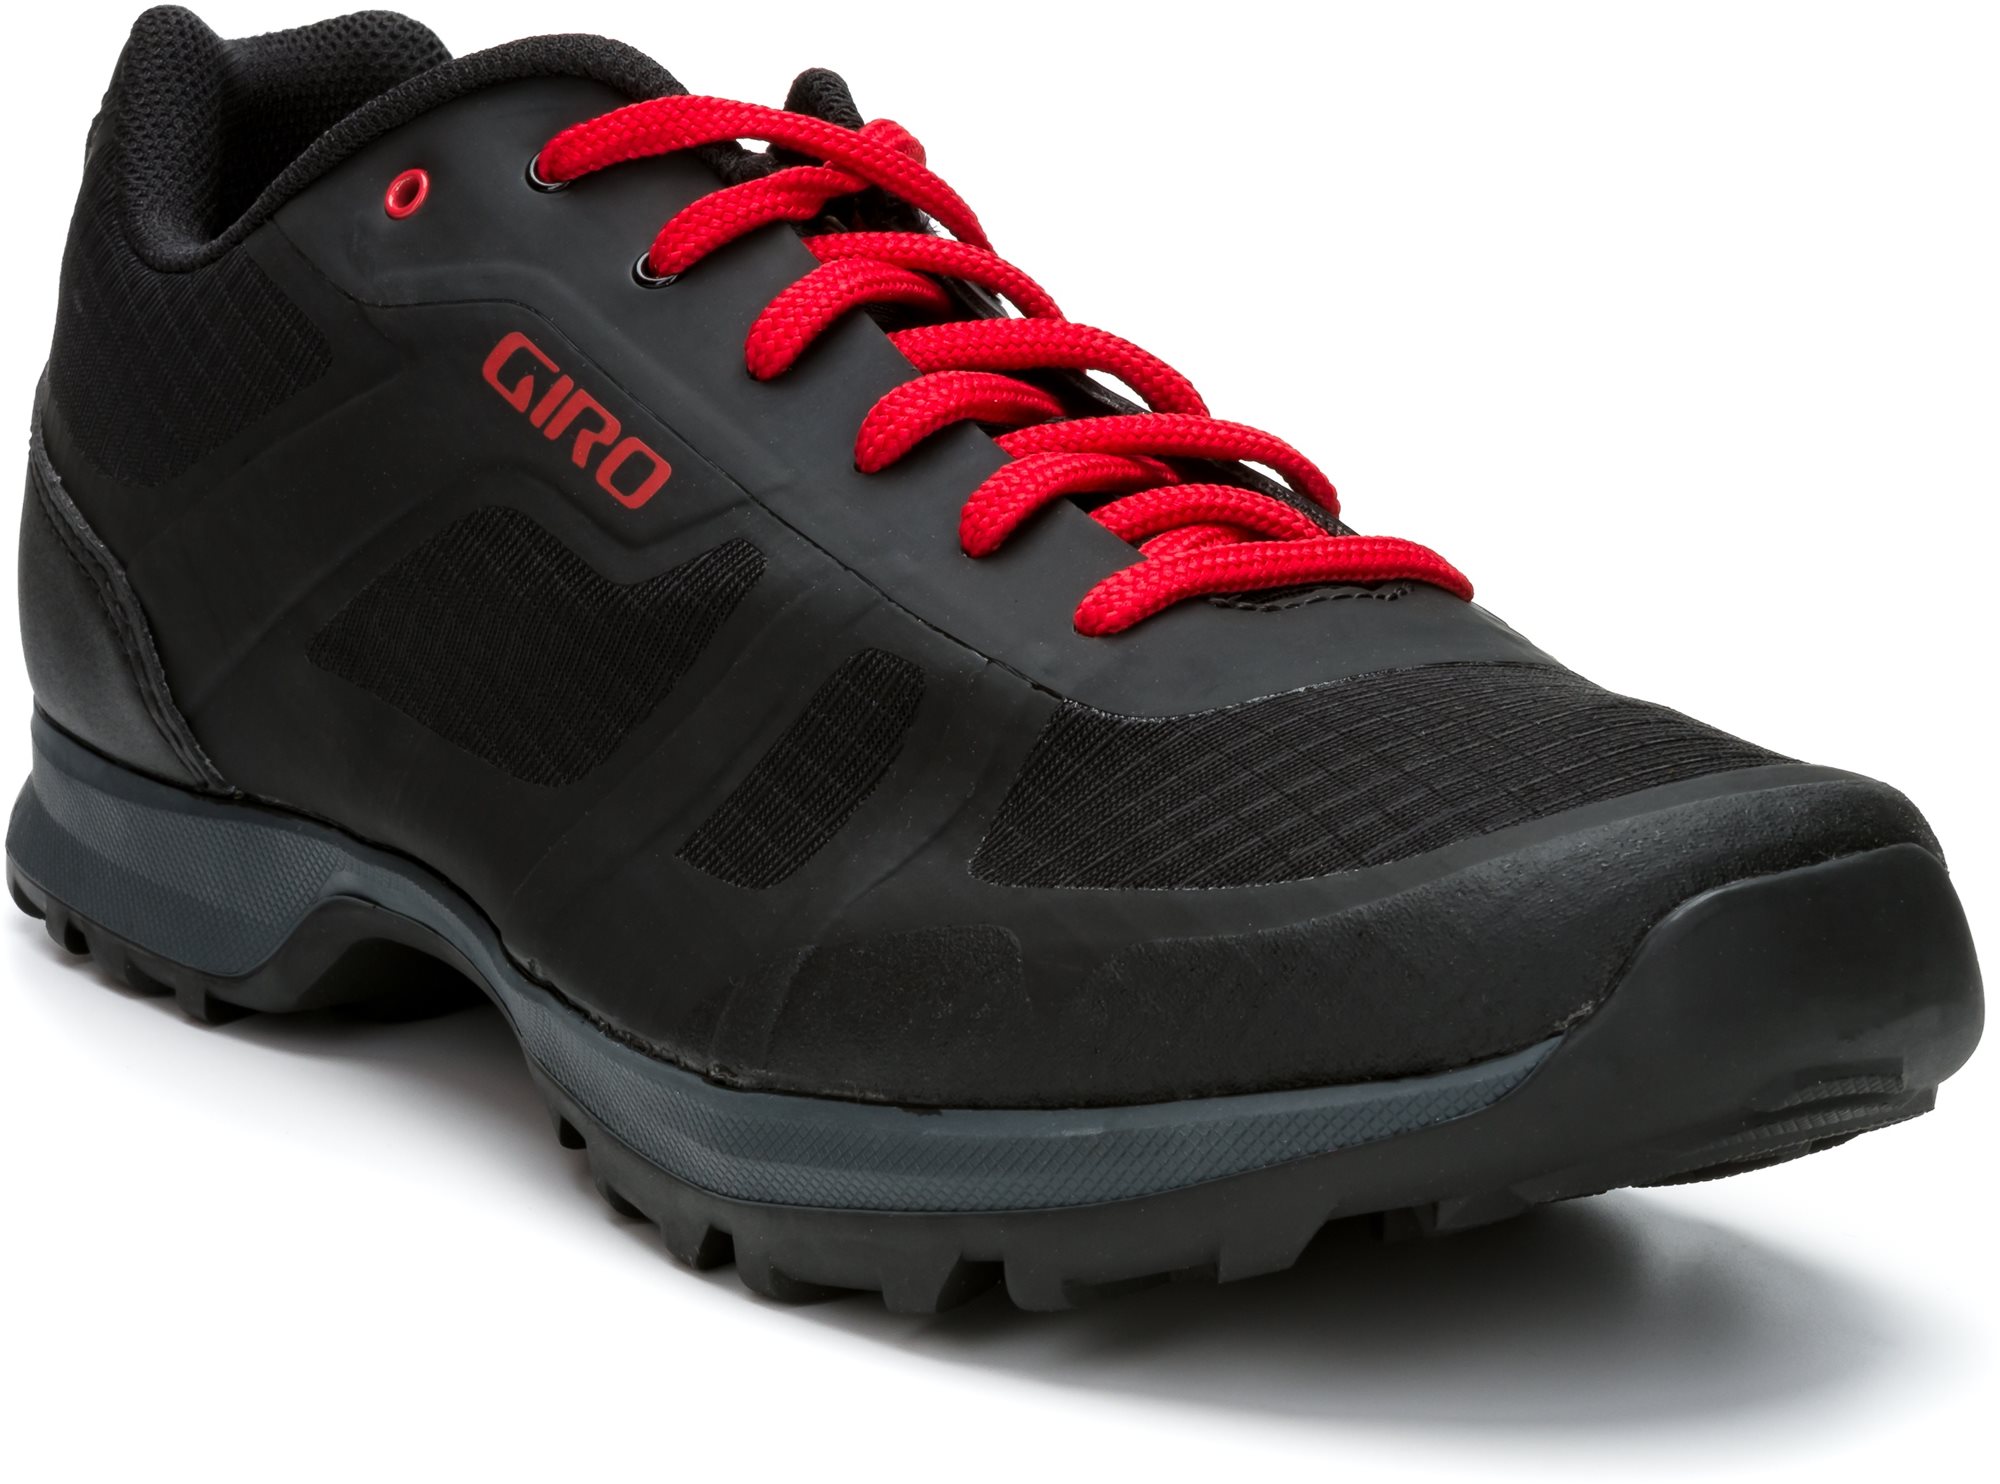 GIRO Gauge kerékpáros cipő, fekete/világos piros, 45-ös